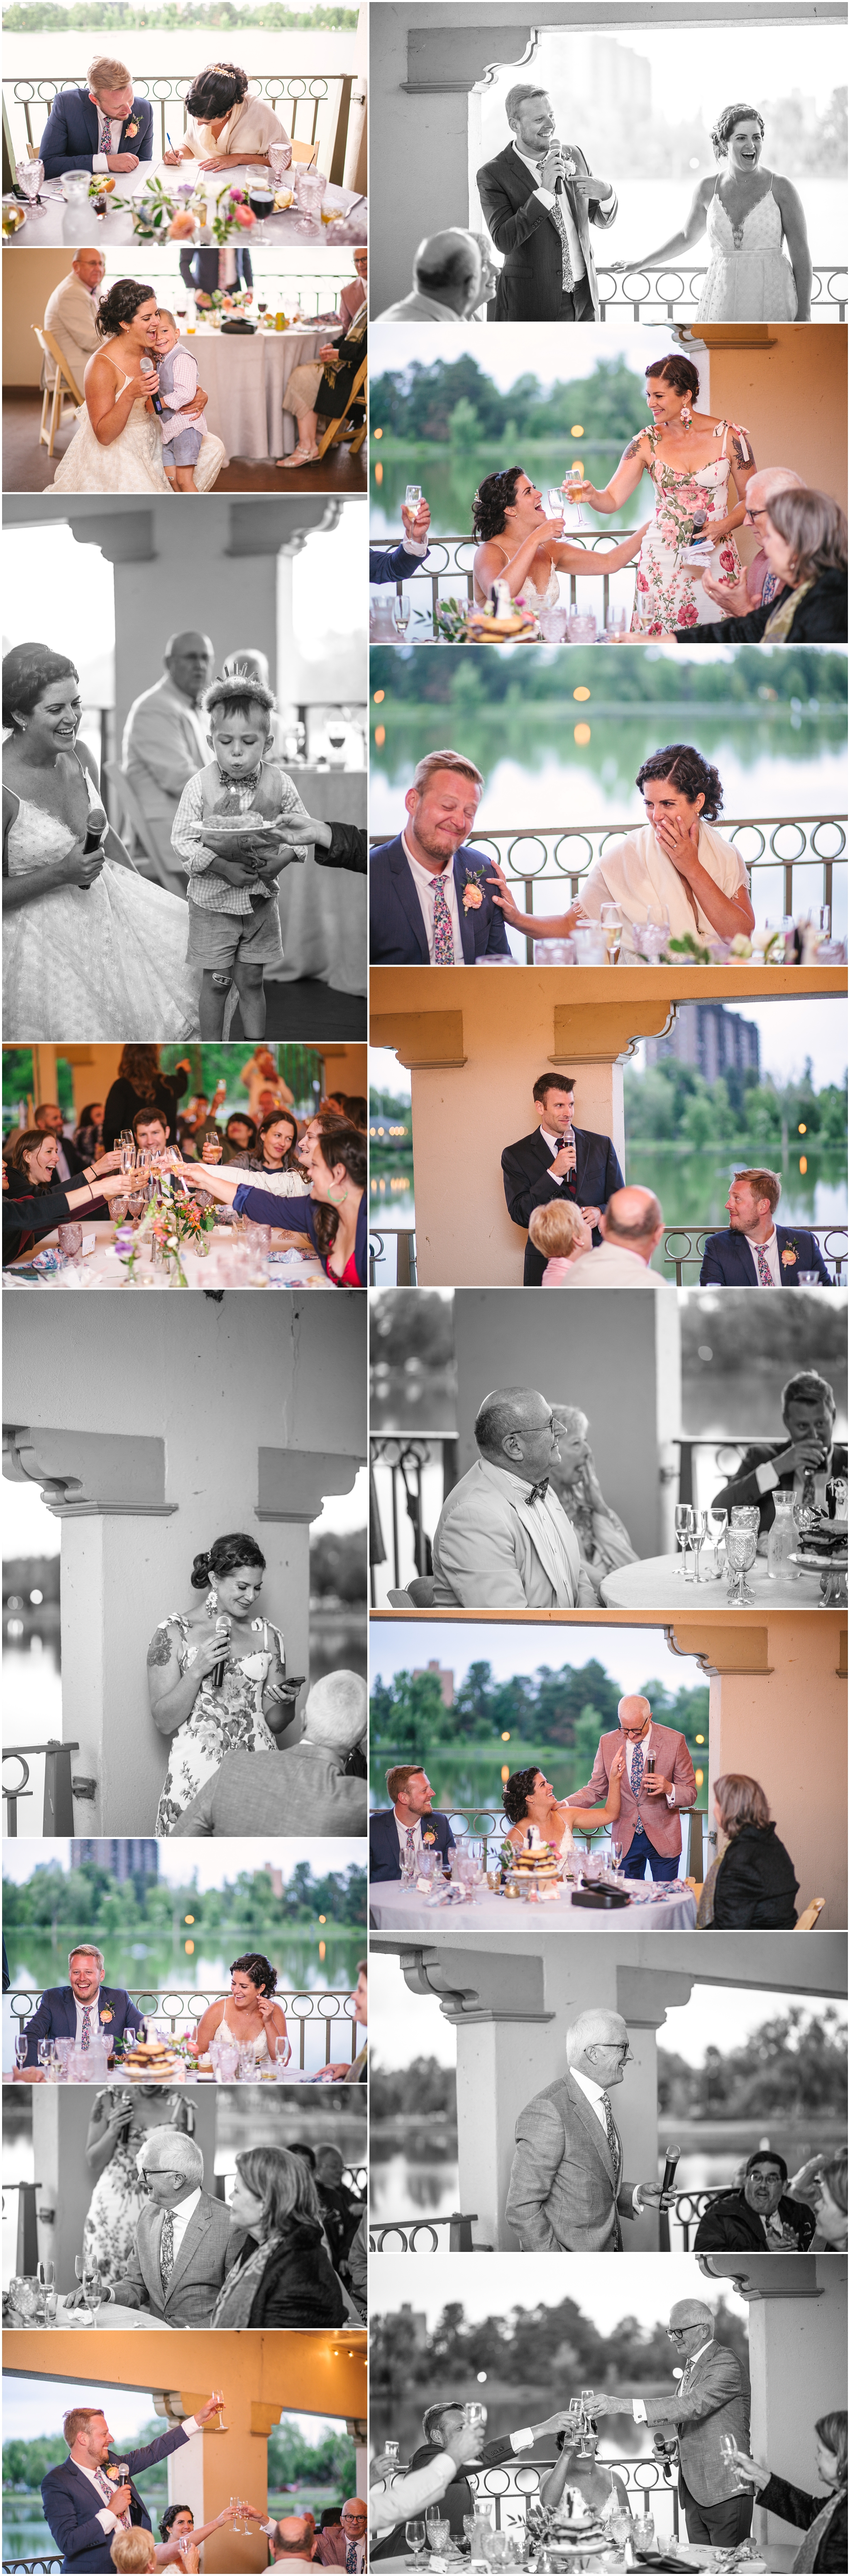 Toasts to the bride and groom at Washington Park Boathouse wedding reception in Denver Colorado